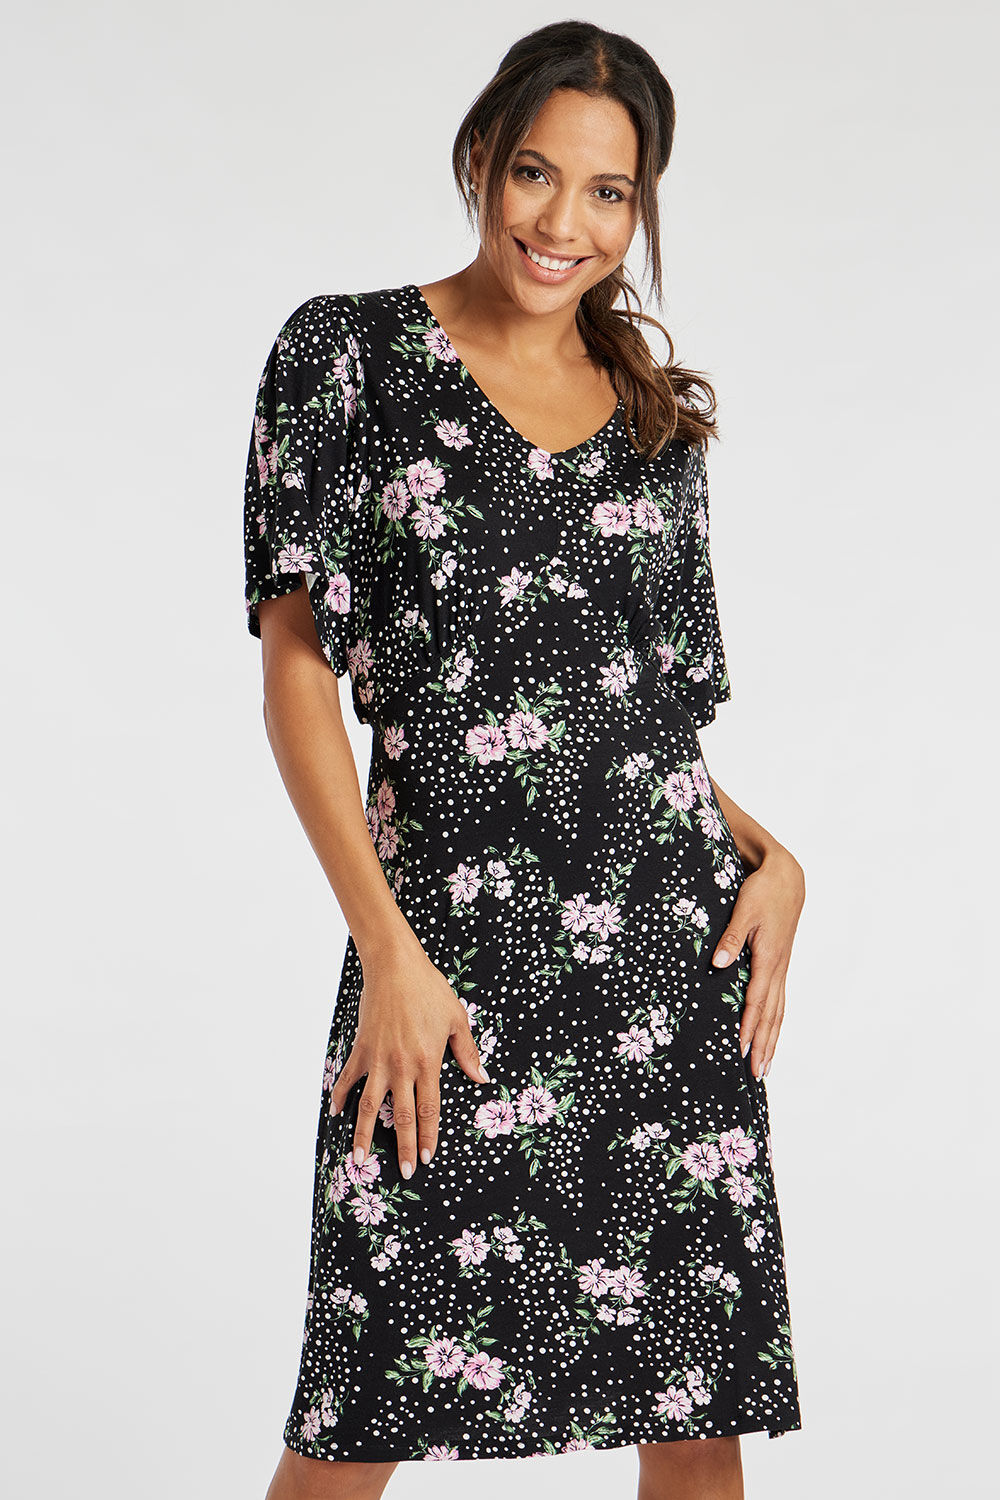 Bonmarche Black Floral Spot Print Jersey Tea Dress, Size: 10